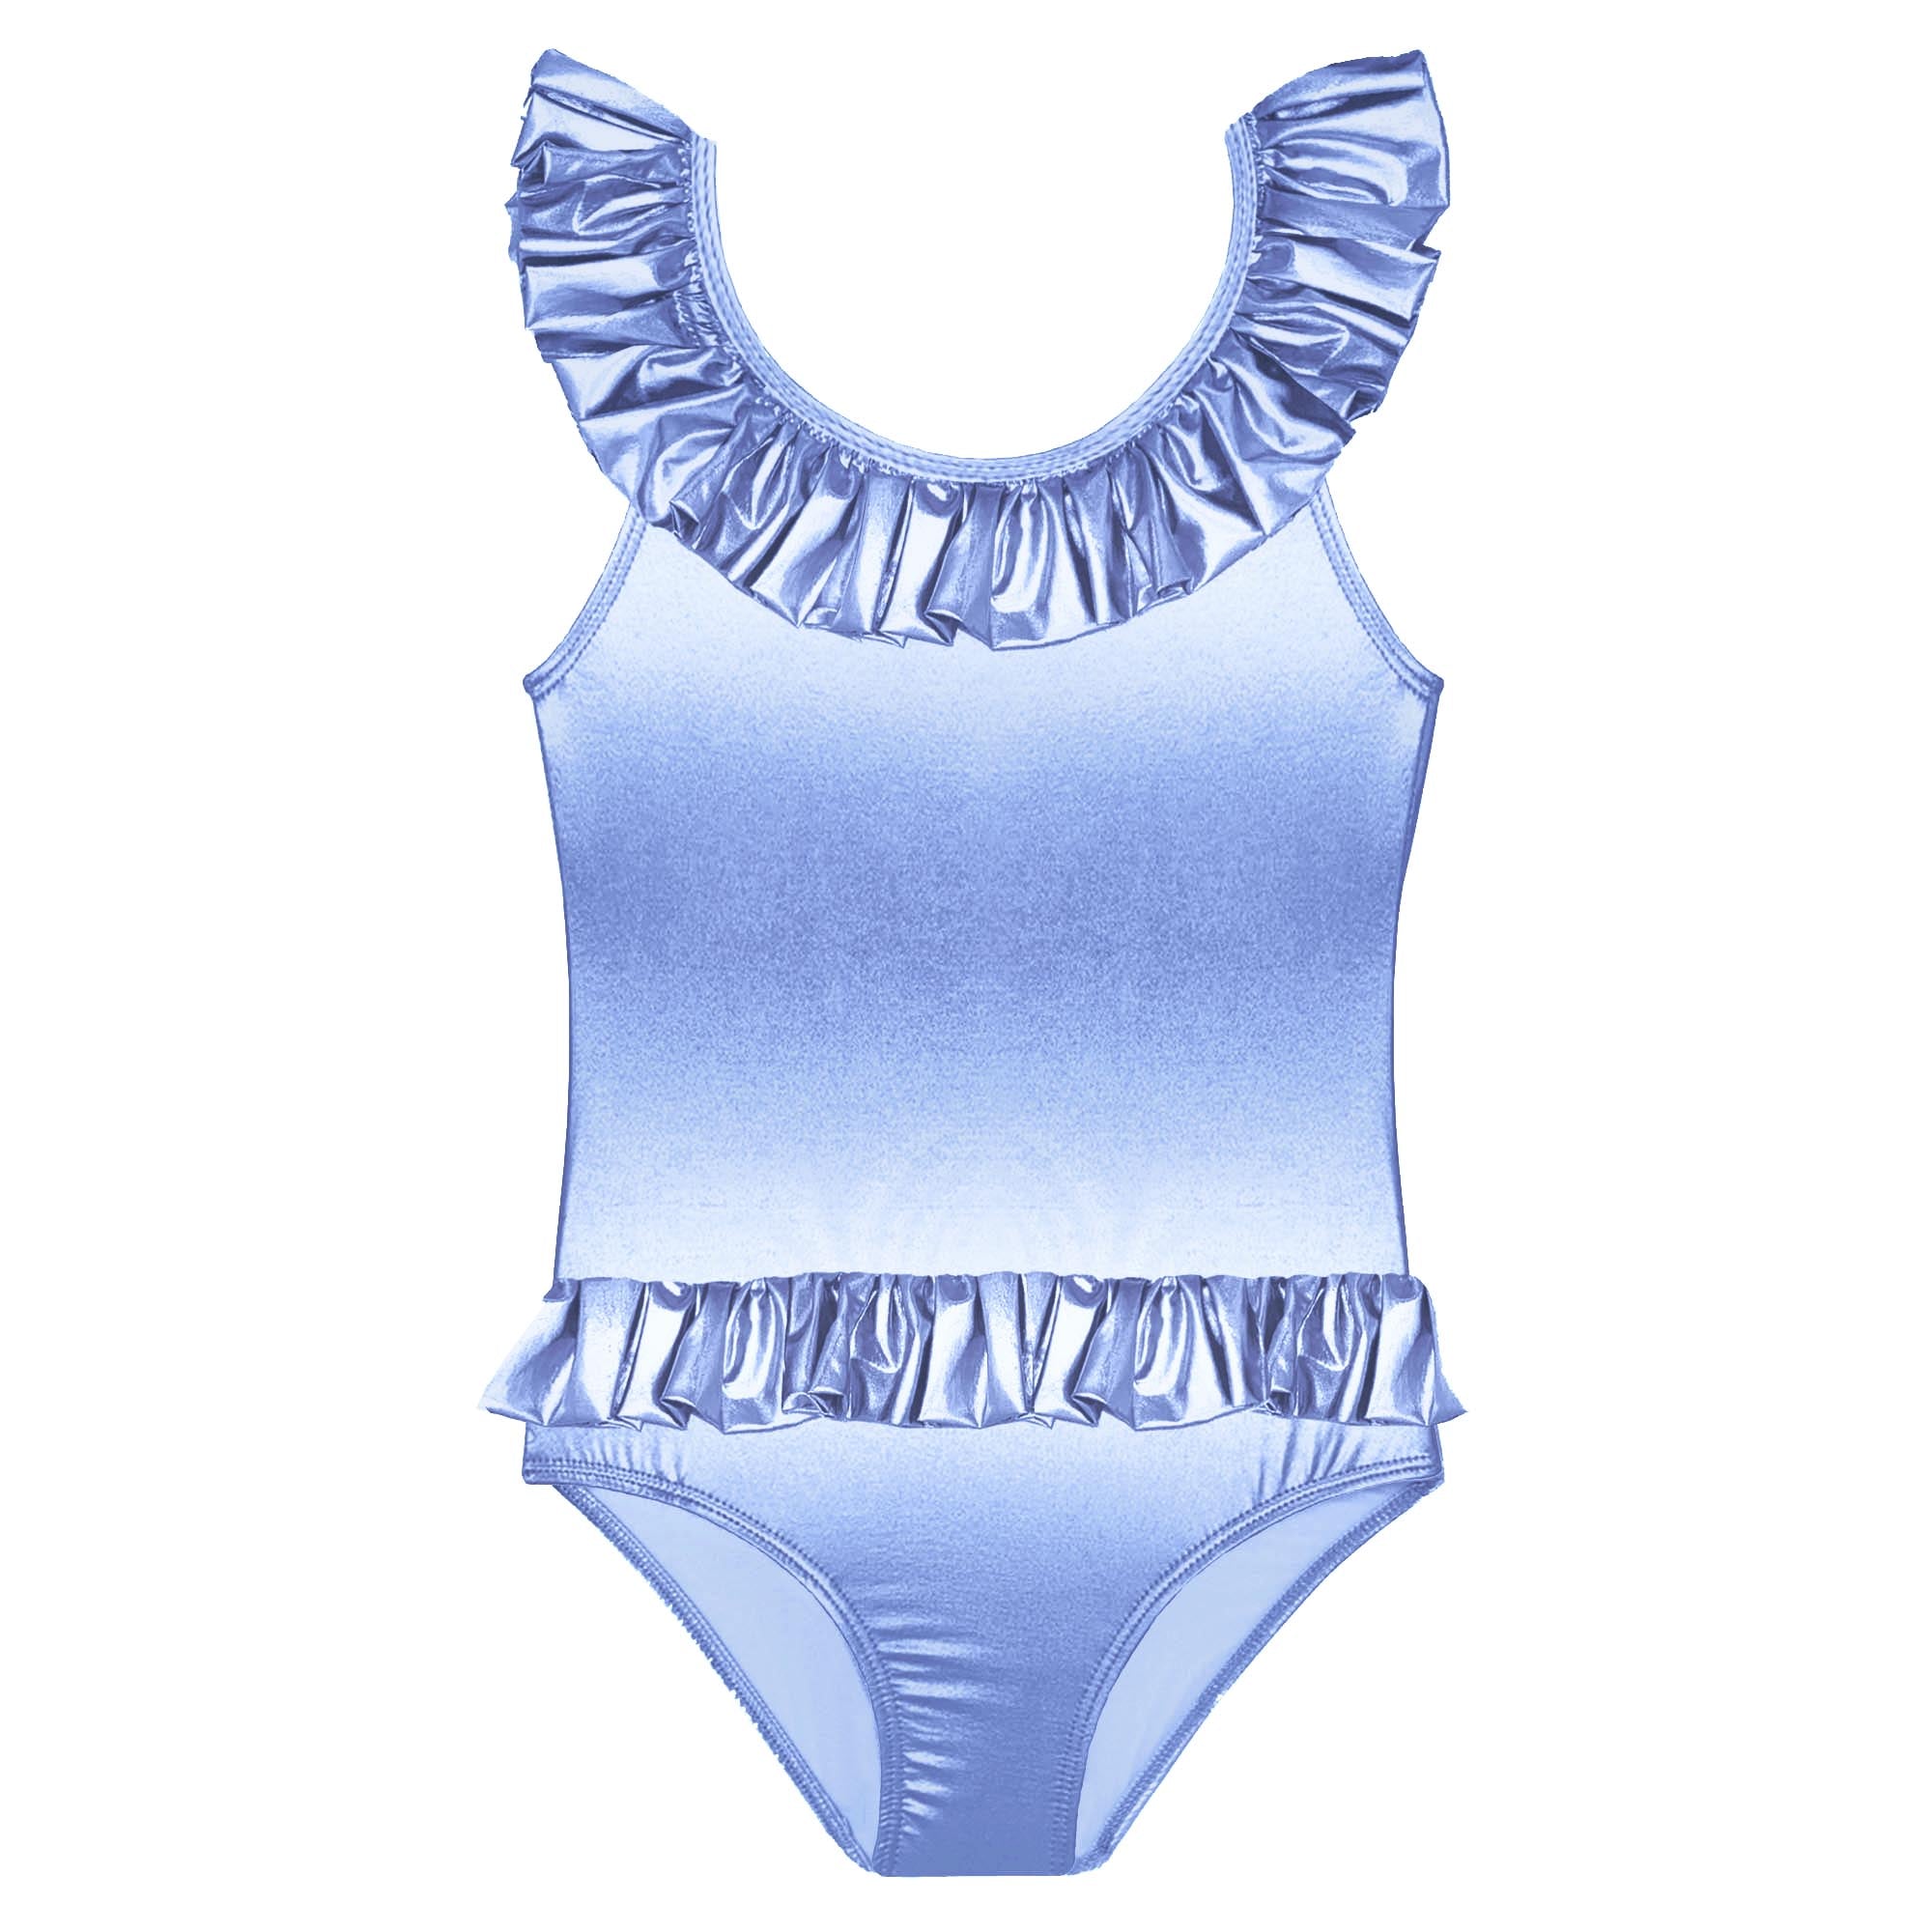 Girls' swimsuit, iridescent blue